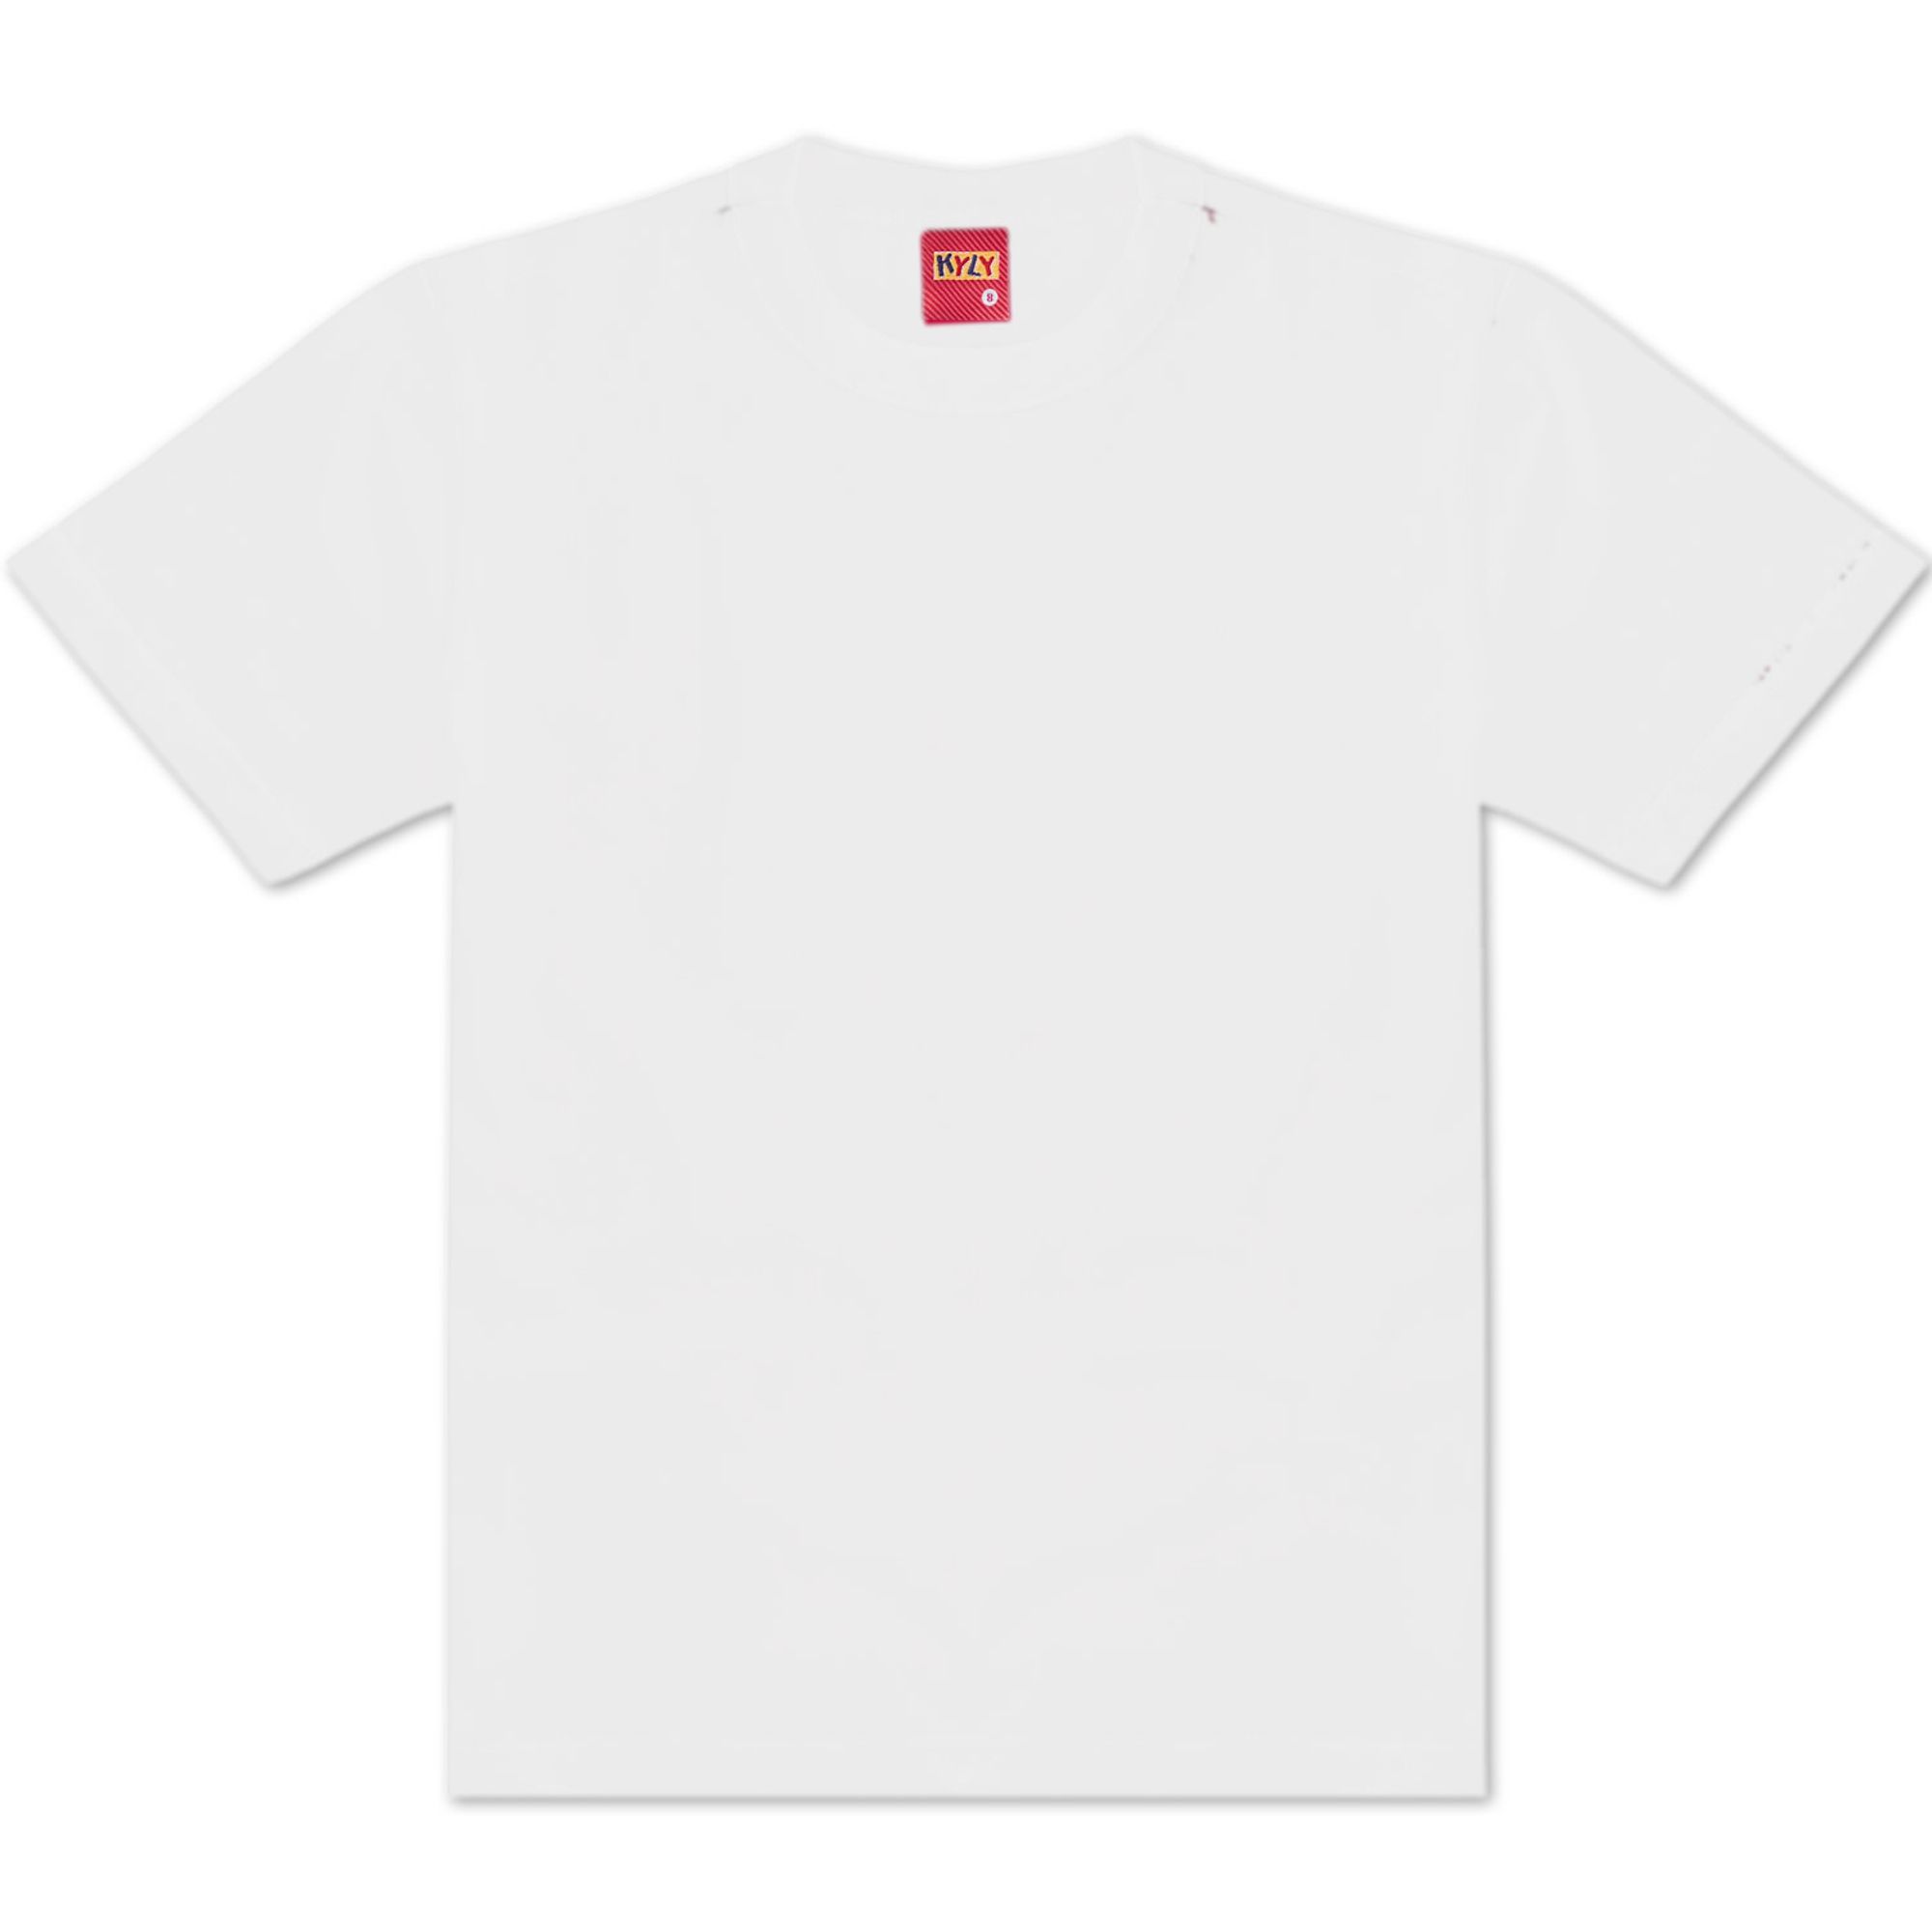 camiseta-basica-infantil-branca-manga-curta